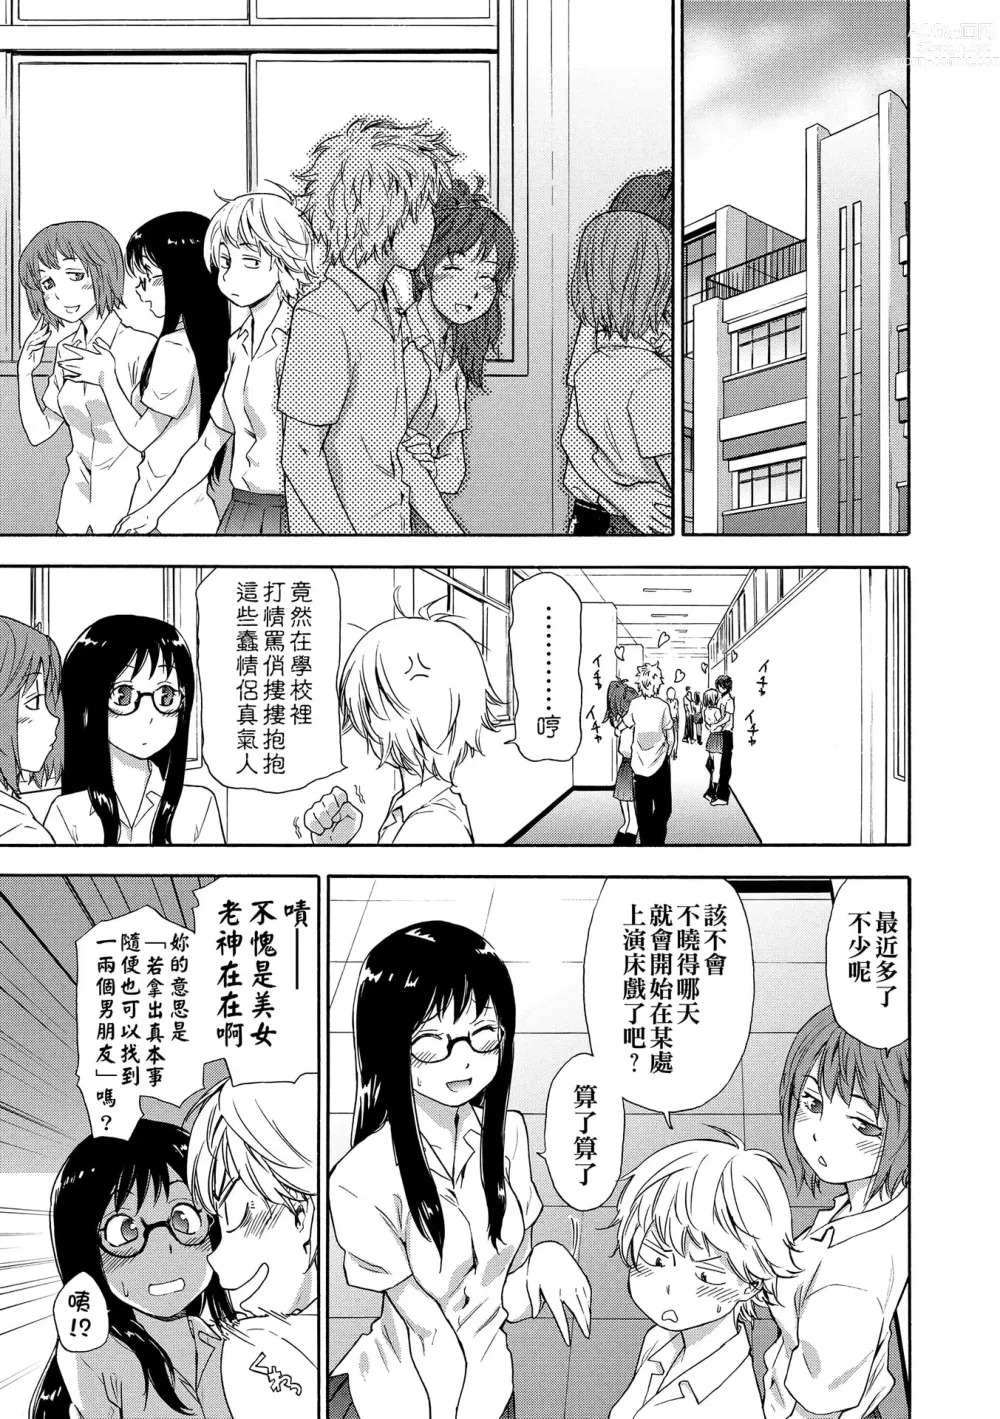 Page 7 of manga 甜美香濃的香草精華 (uncensored)